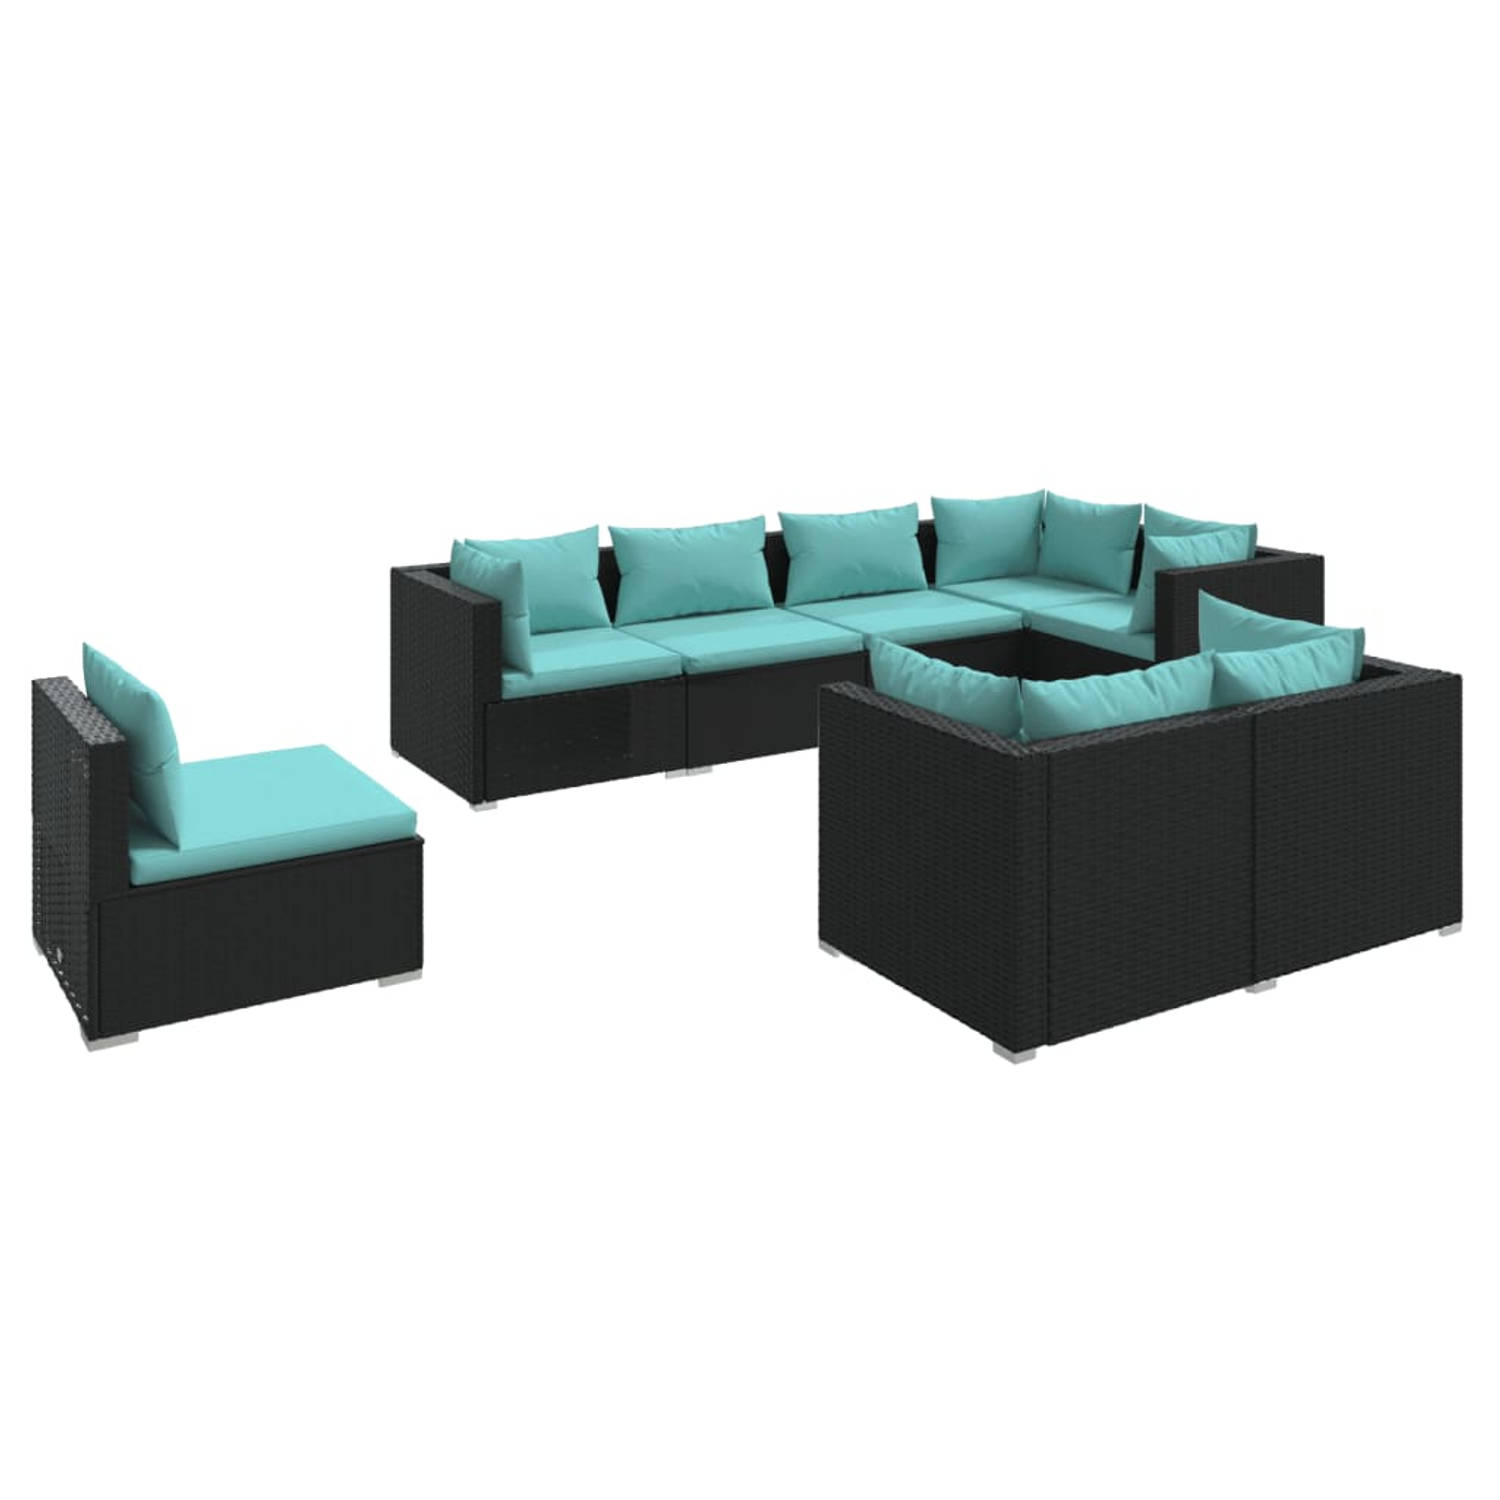 The Living Store Loungeset - poly rattan - zwart - waterblauwe kussens - modulair design